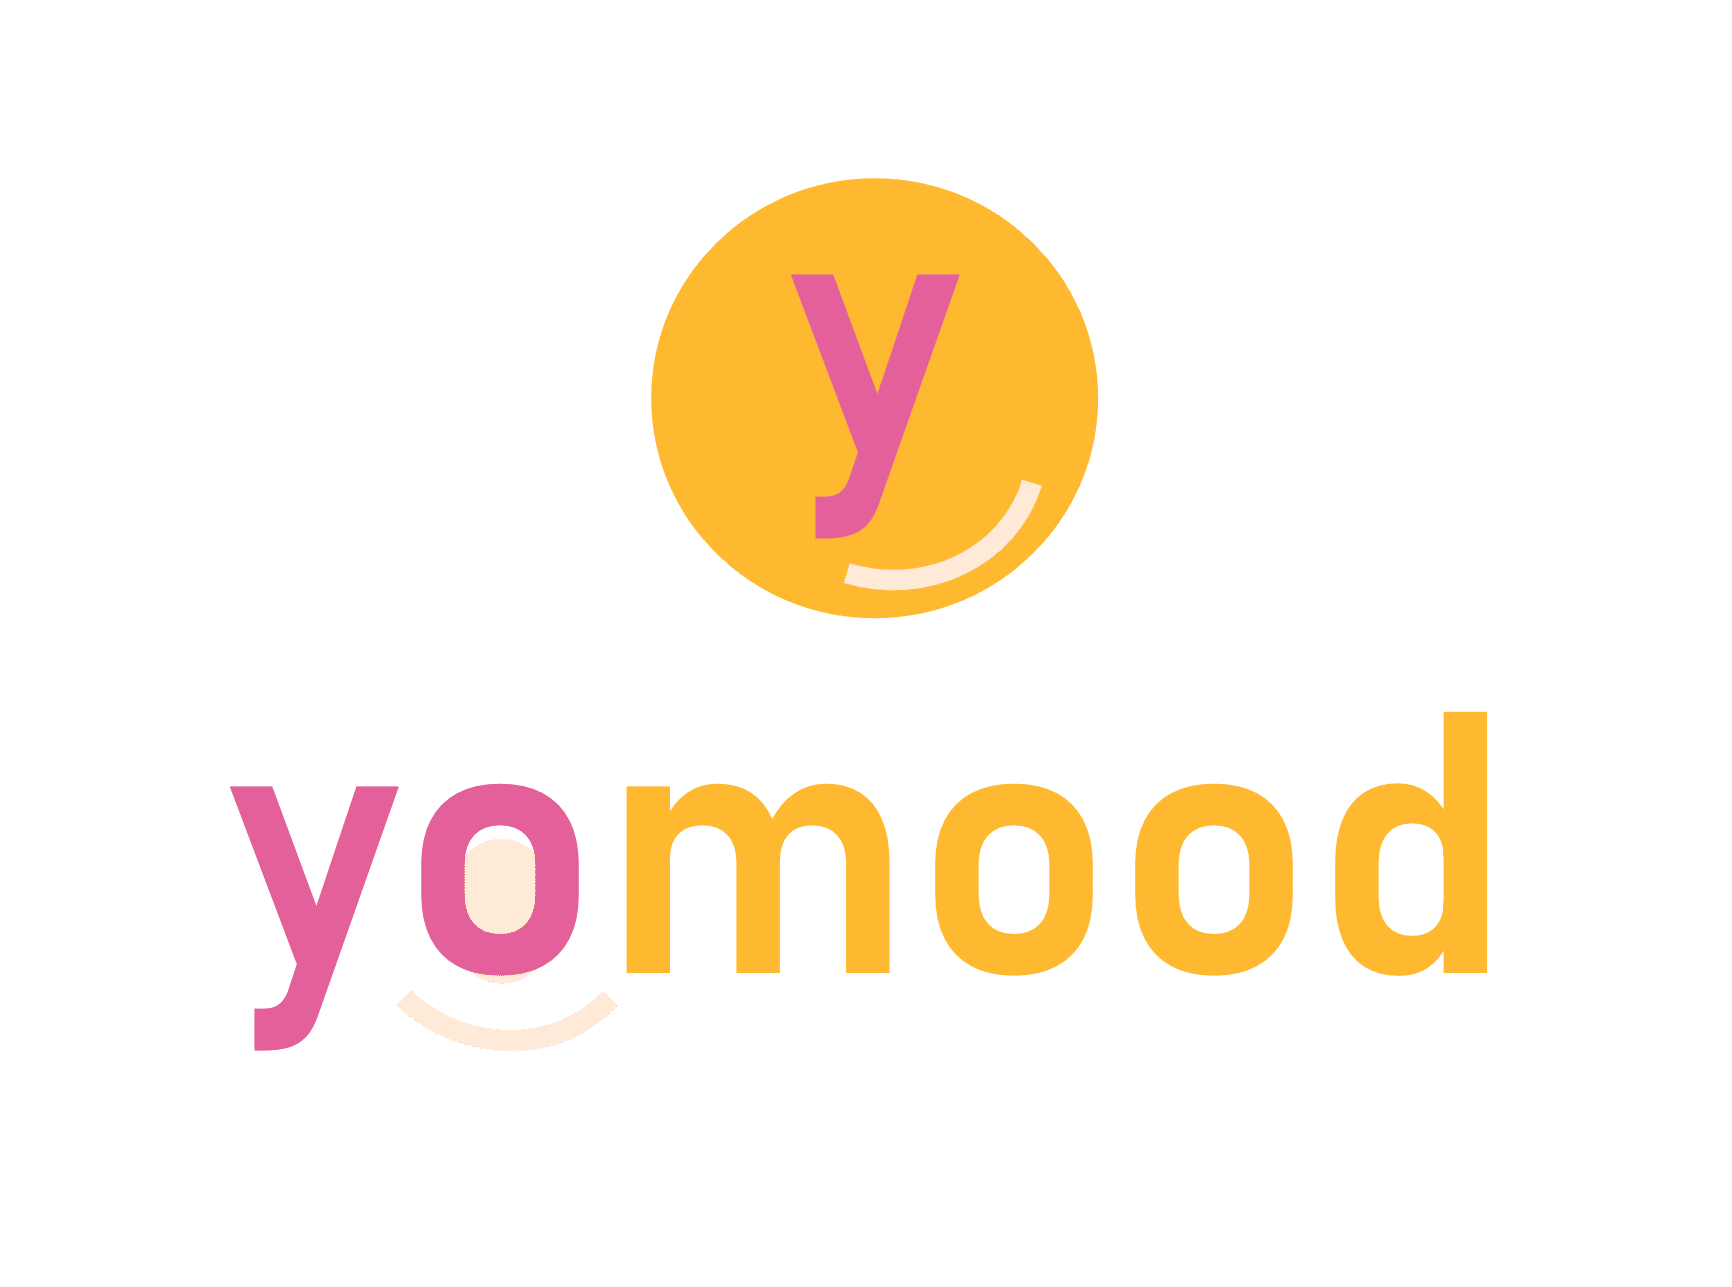 yomood logo